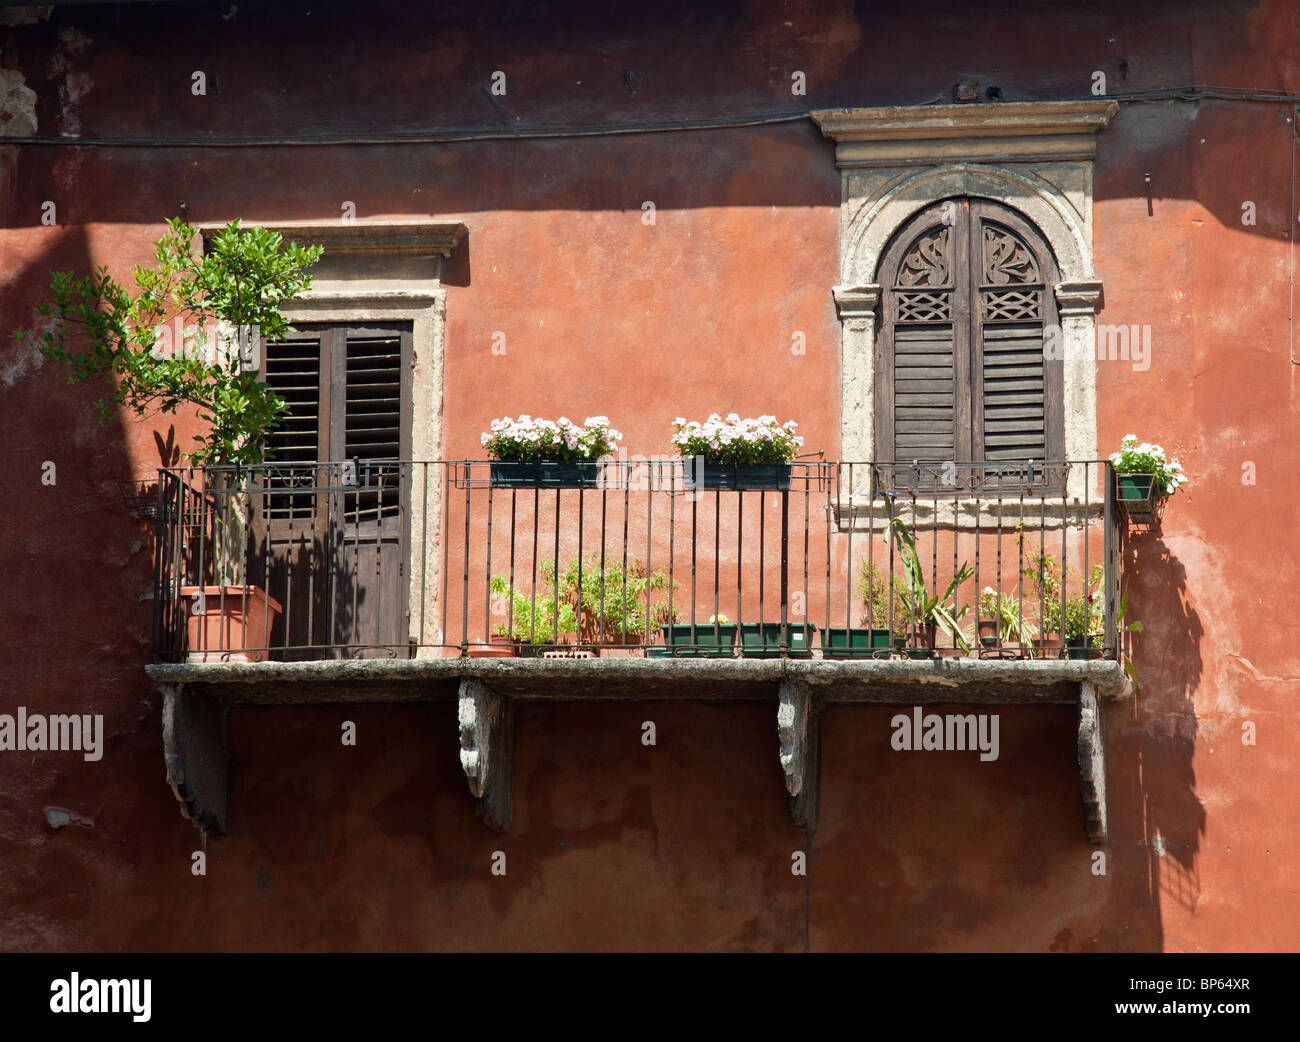 Antico balcone su una casa a Verona, Italia Foto Stock